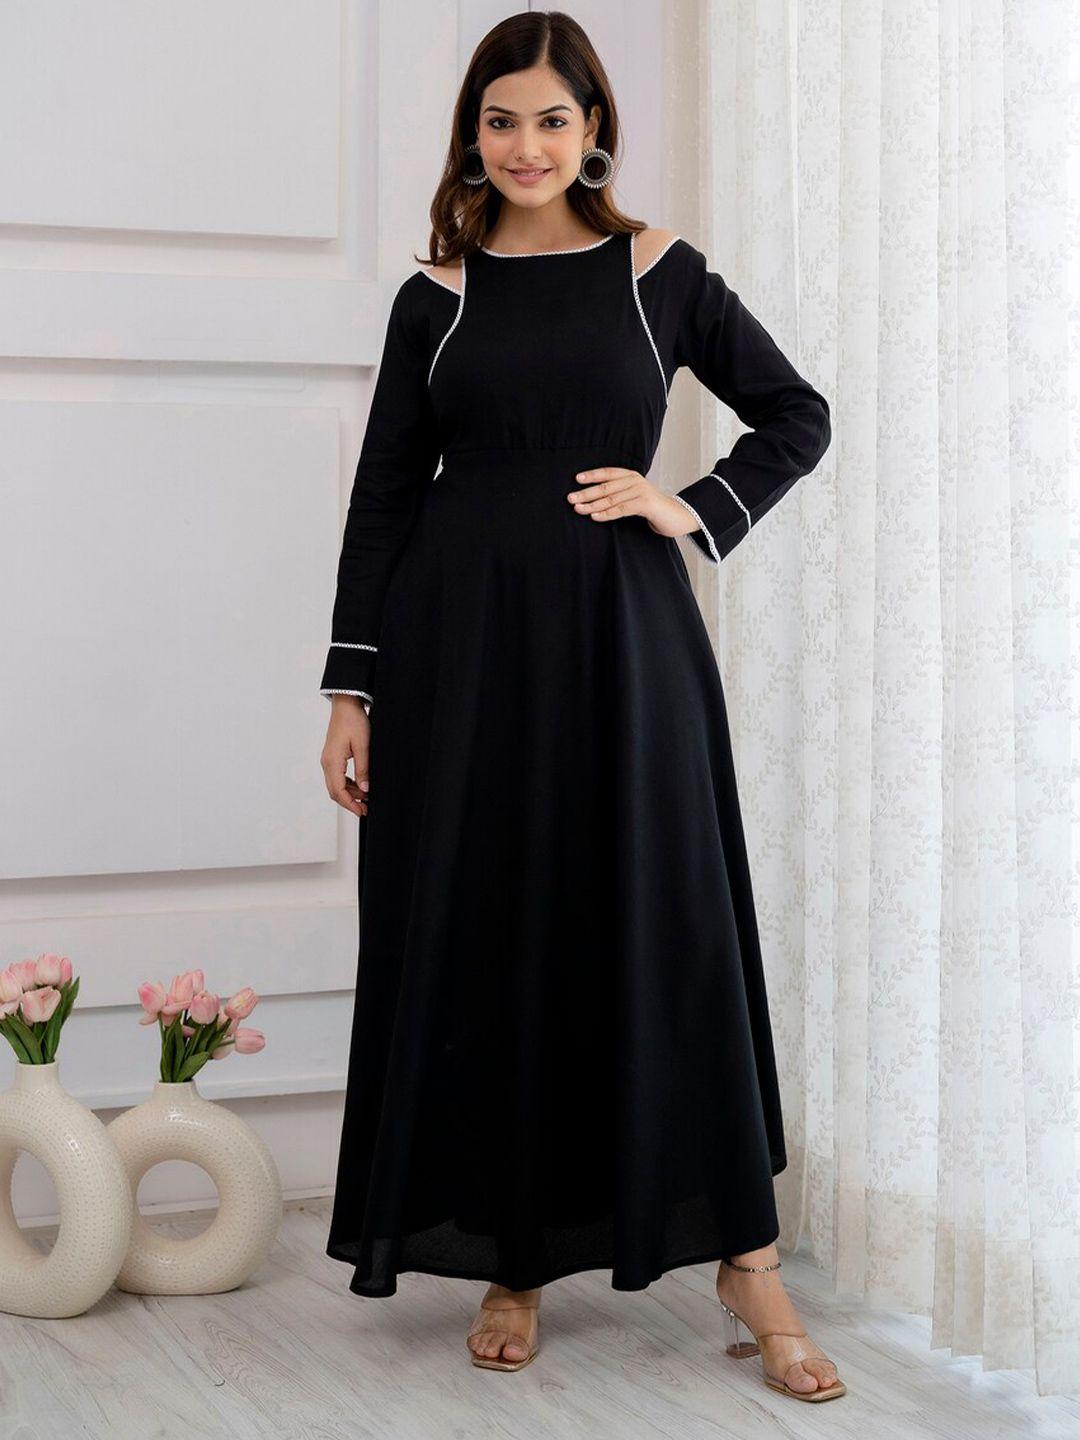 purshottam wala black applique maxi dress